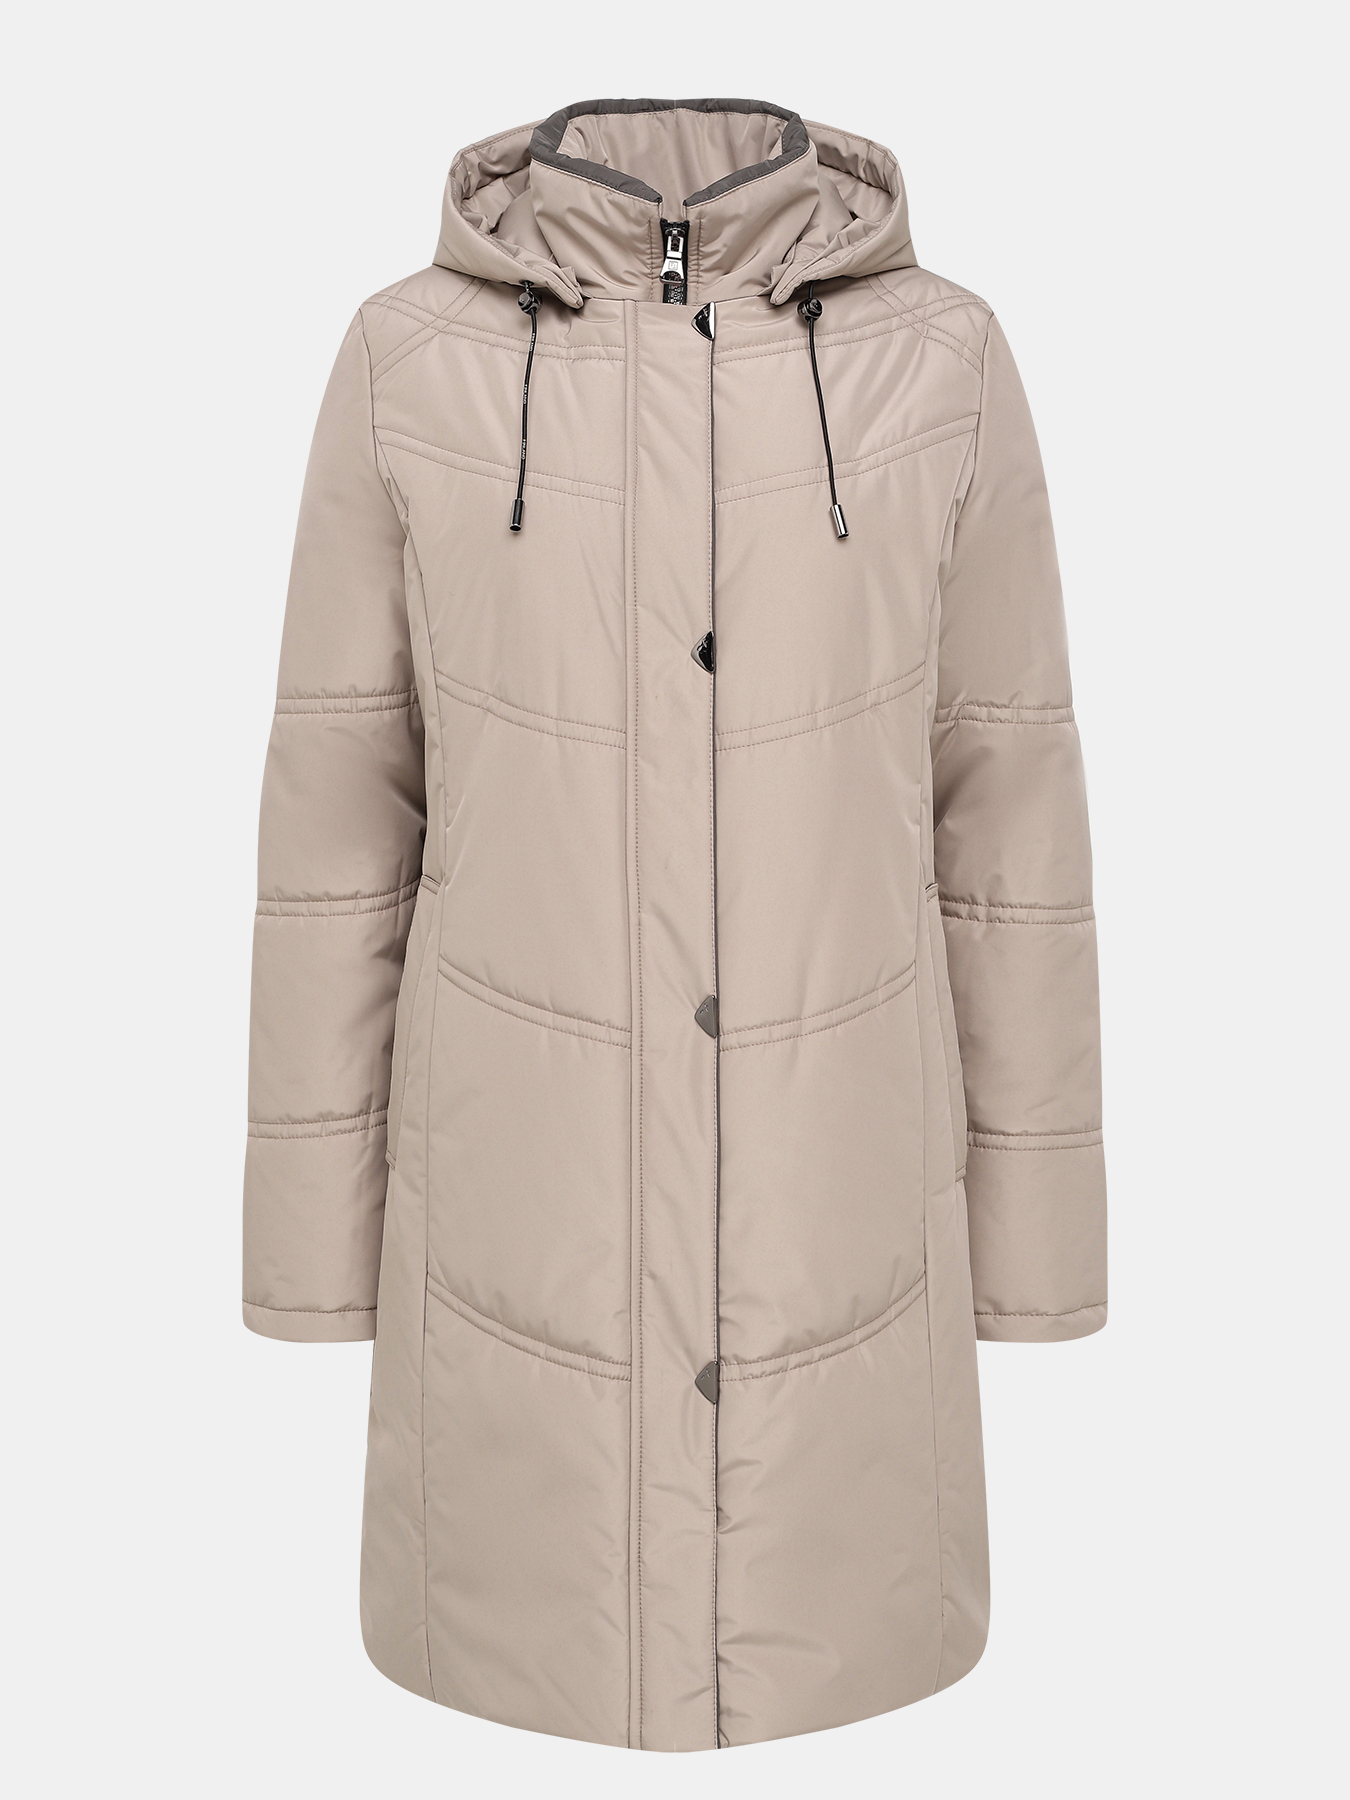 Пальто зимнее Maritta 433523-023, цвет бежевый, размер 50 - фото 1